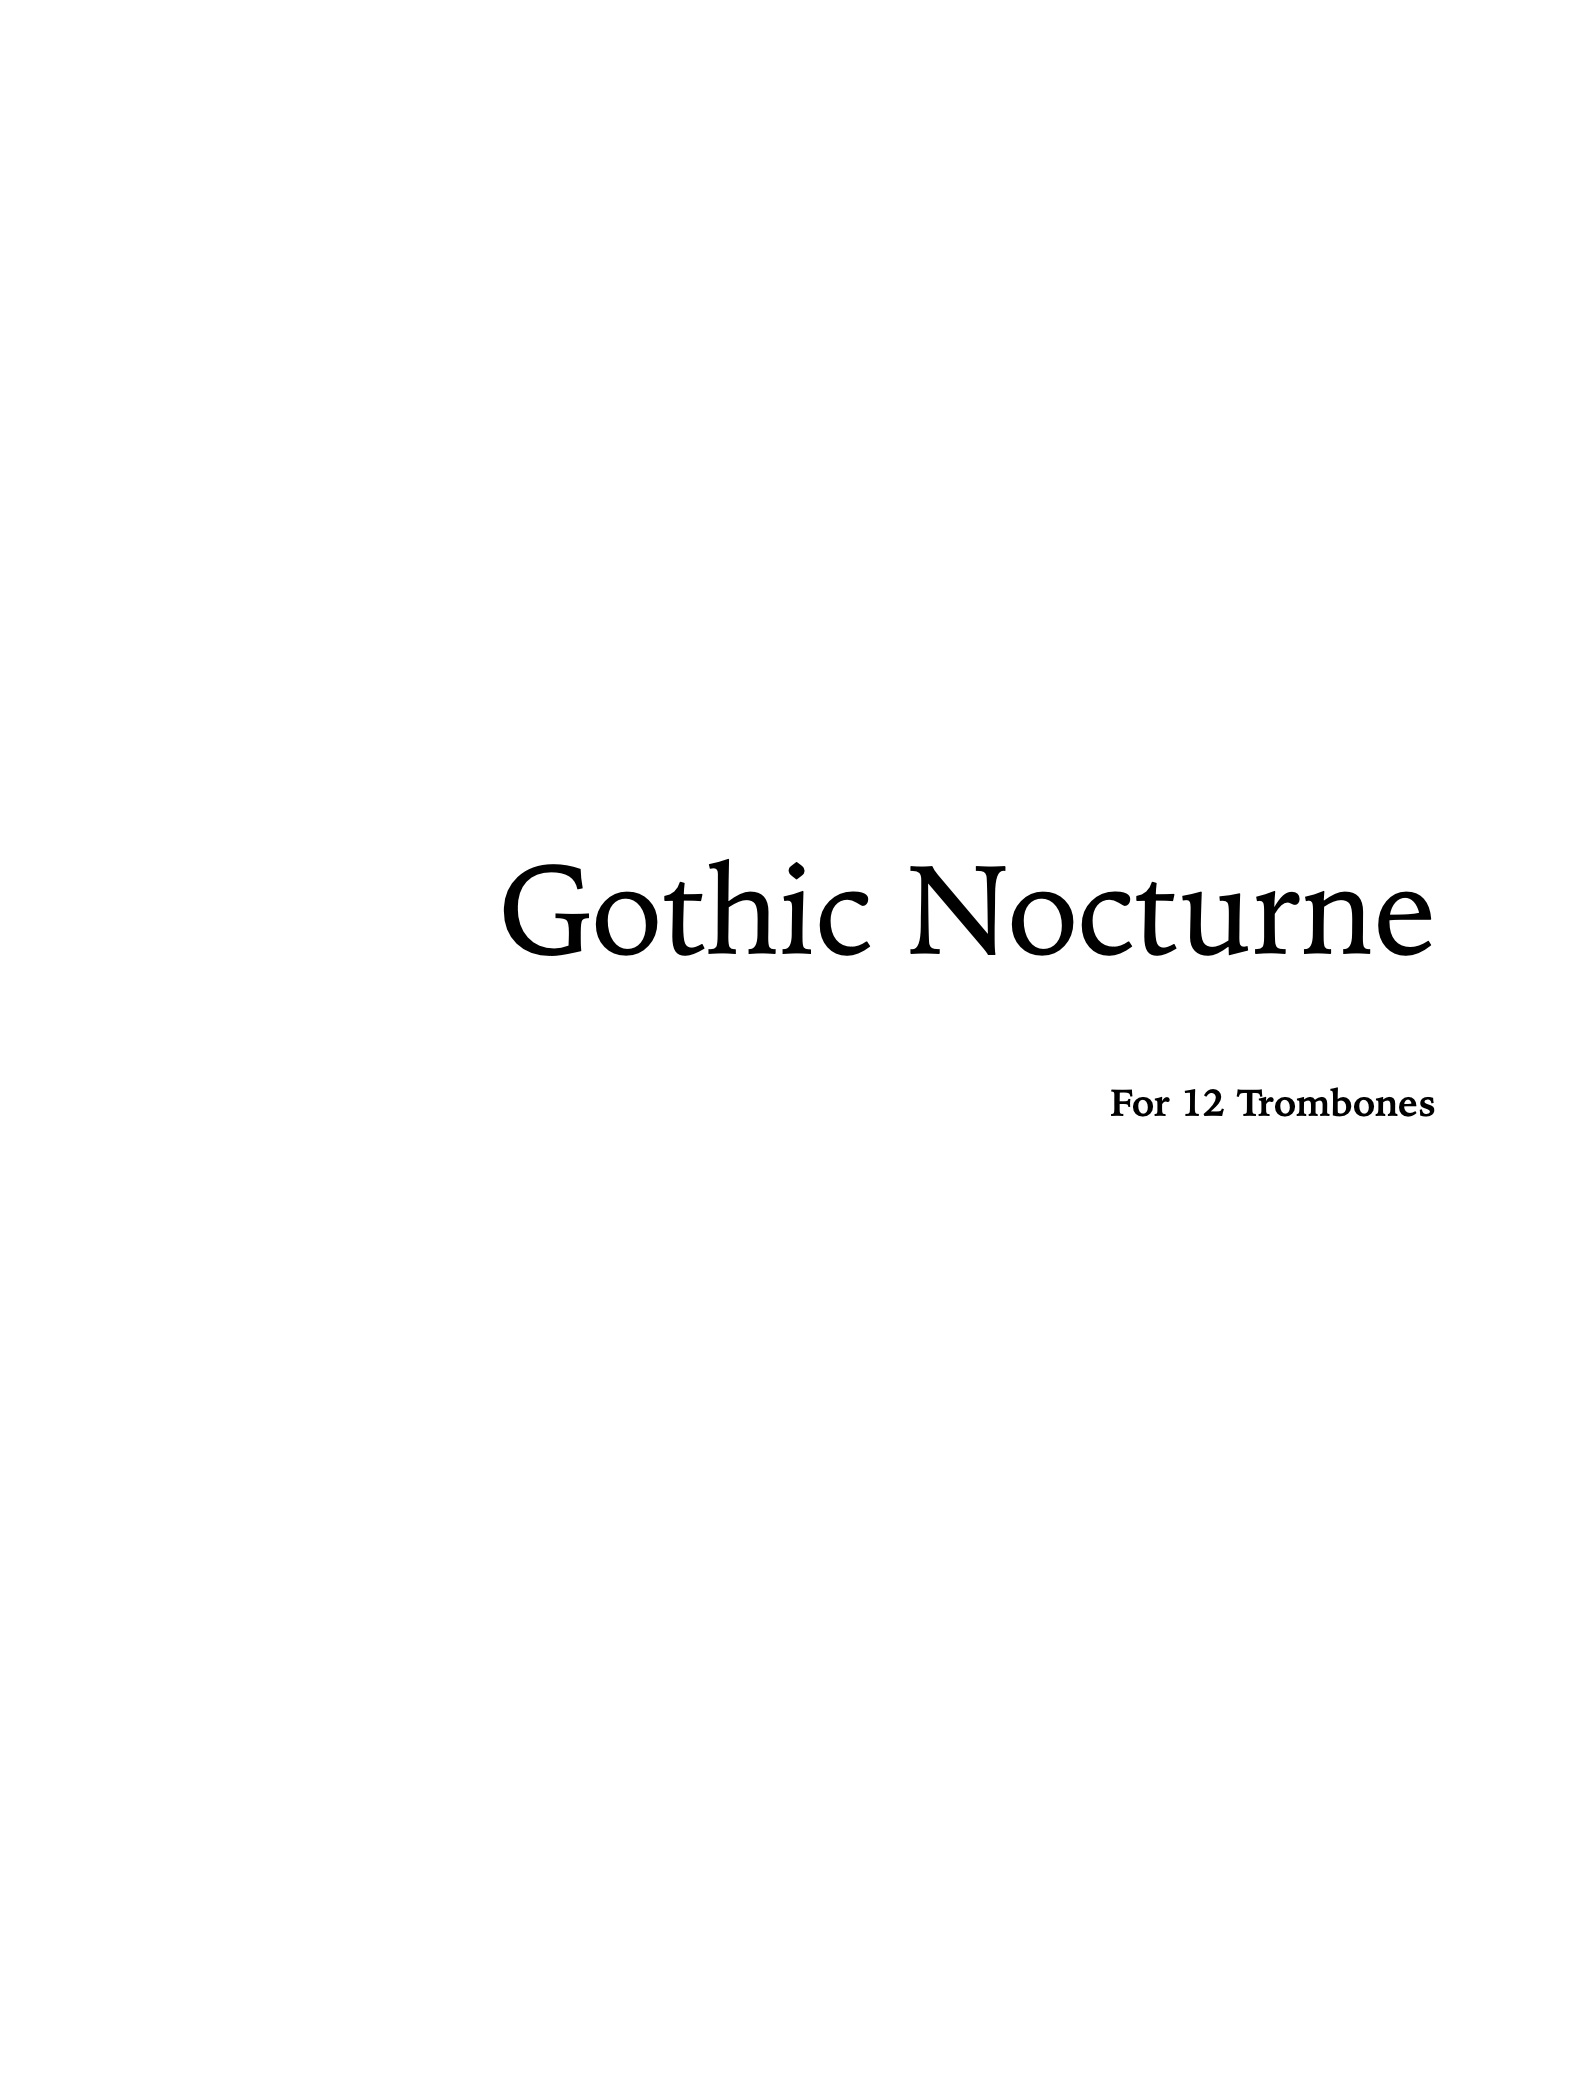 Gothic Nocturne by Jack Wilds